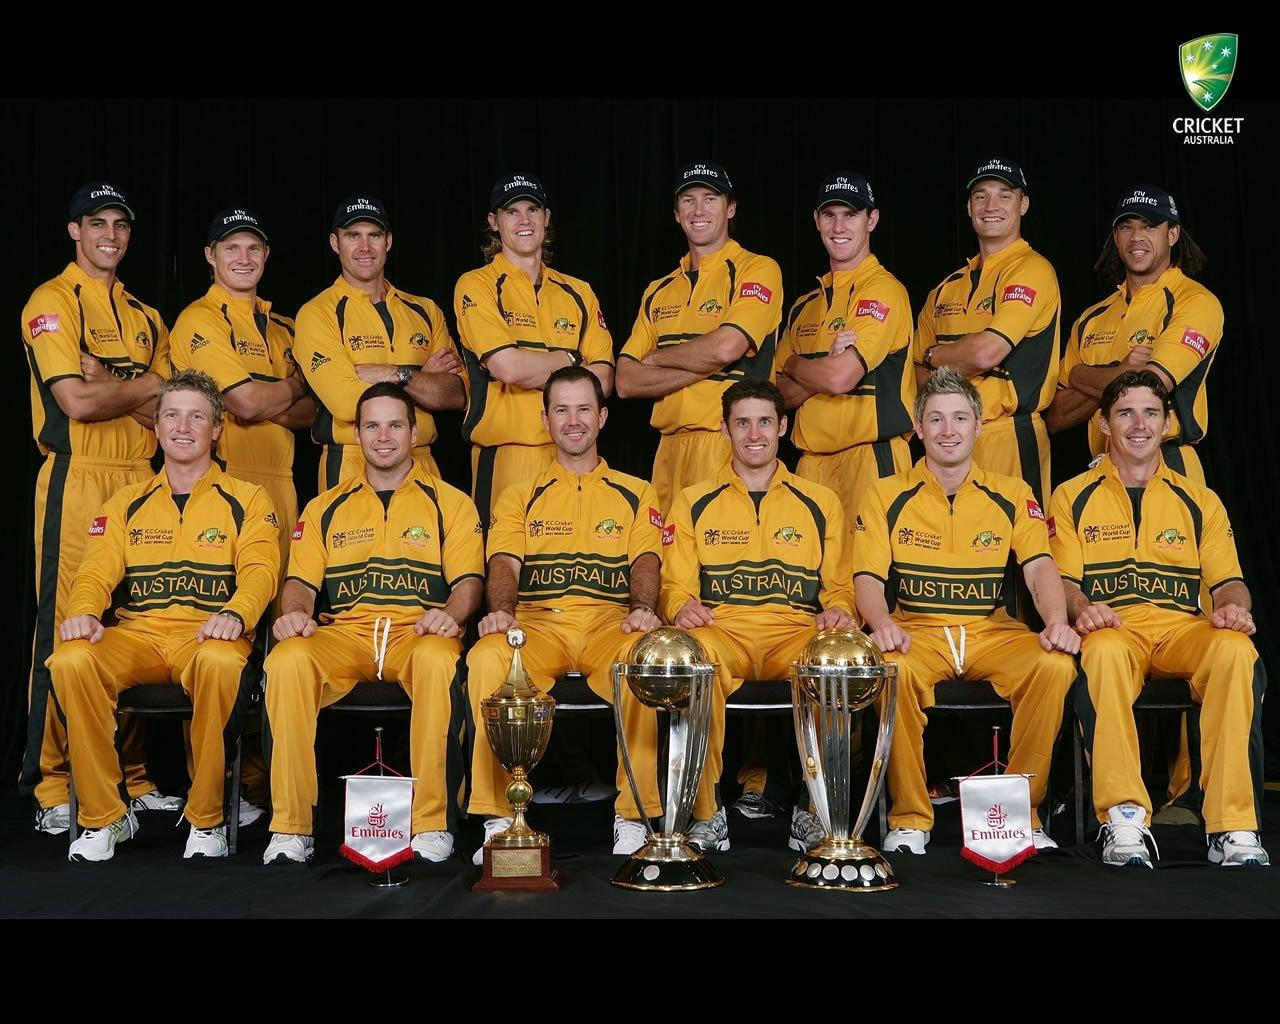 Australia Cricket Team Photograph Wallpaper